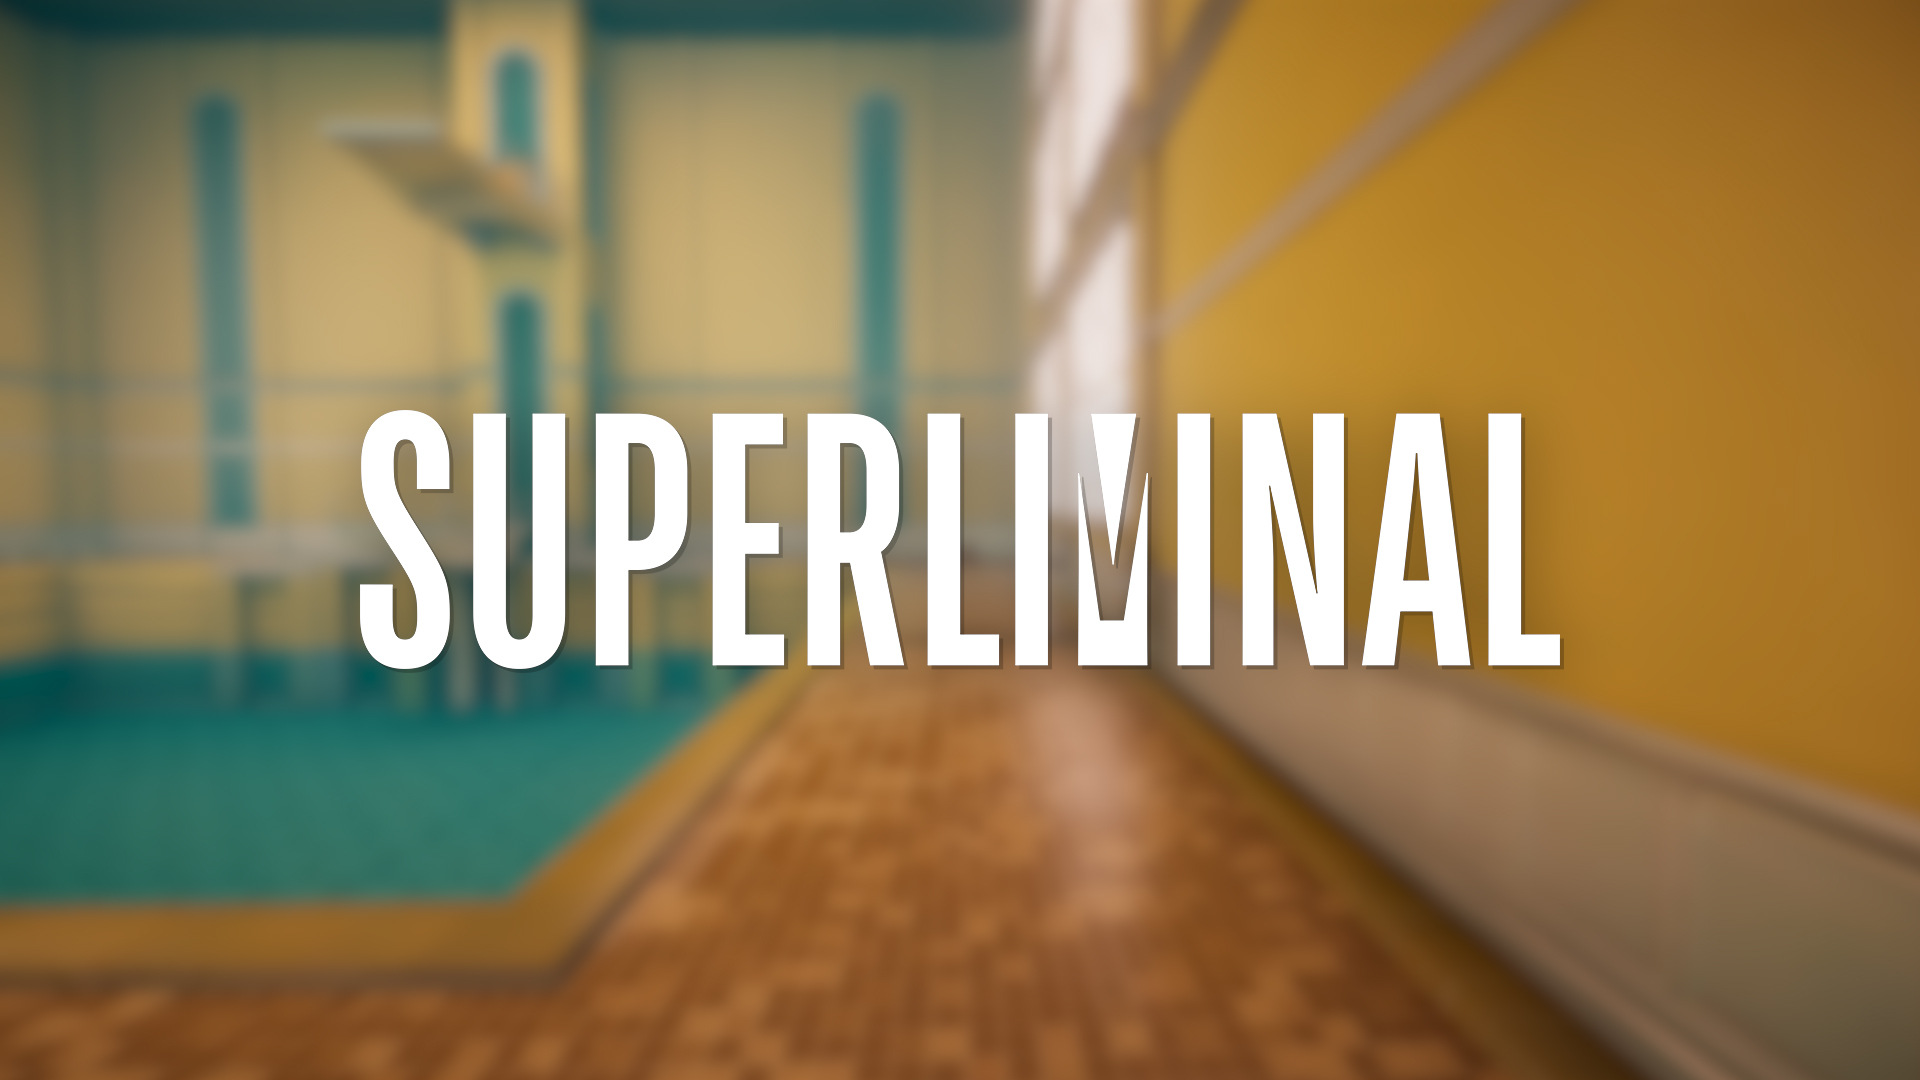 superliminal hall 01